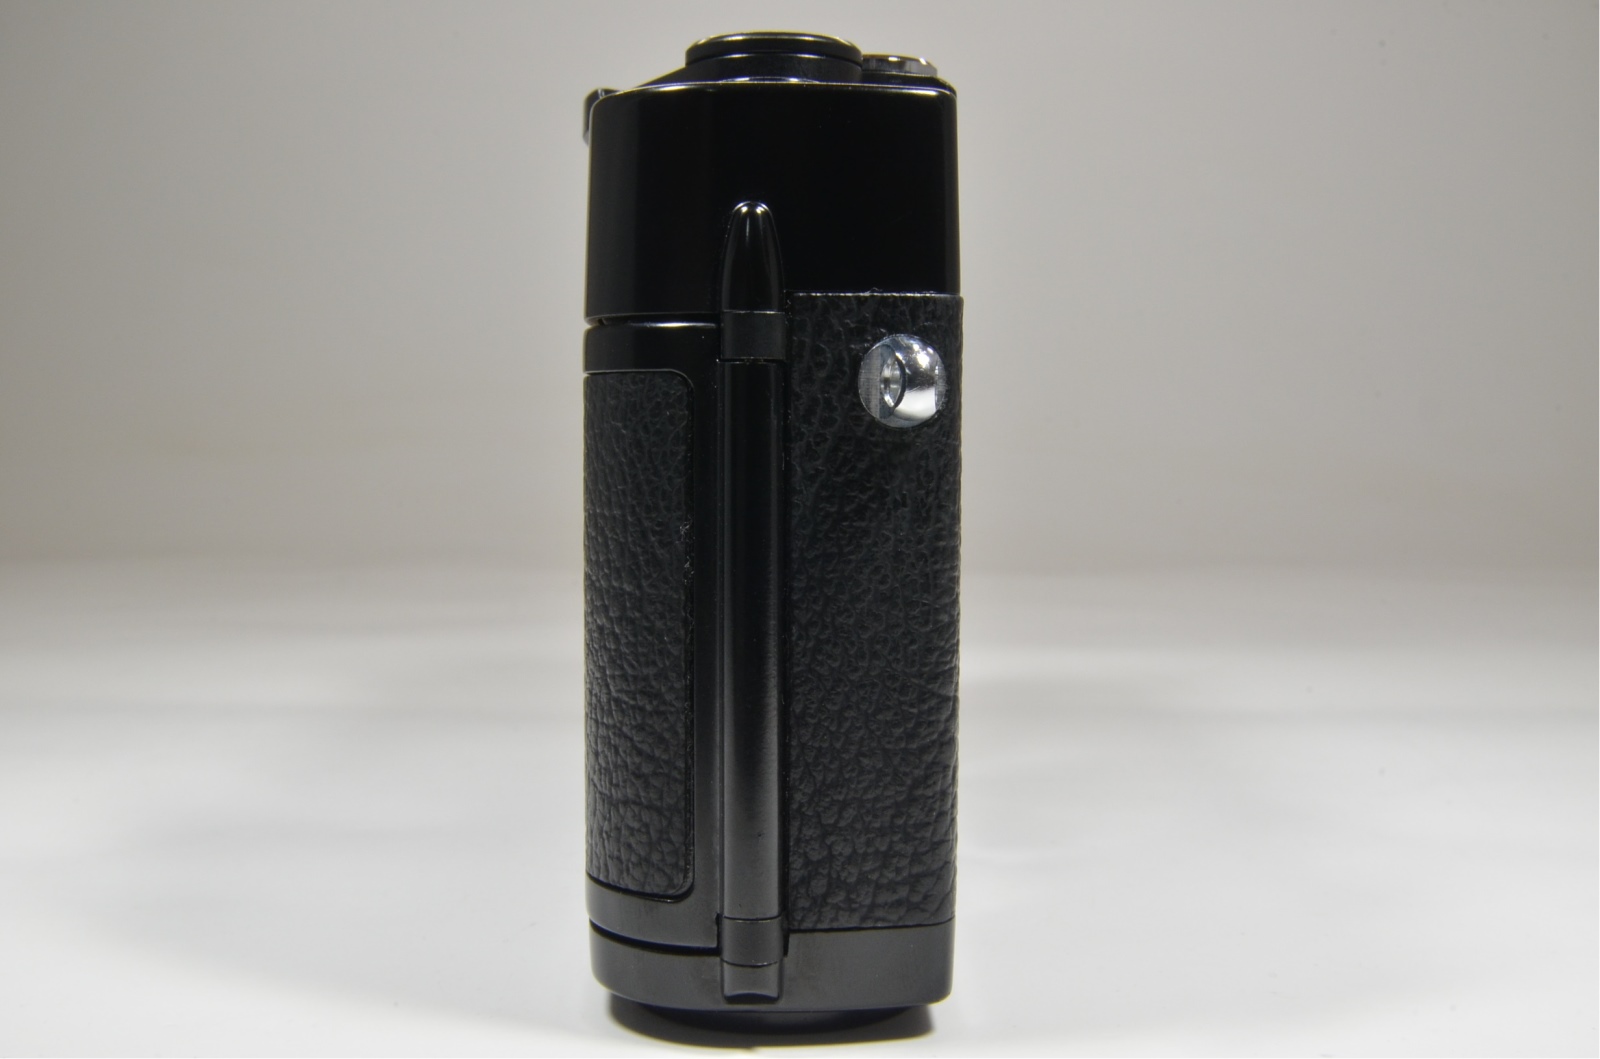 zeiss ikon zm 35mm rangefinder film camera in black with strap